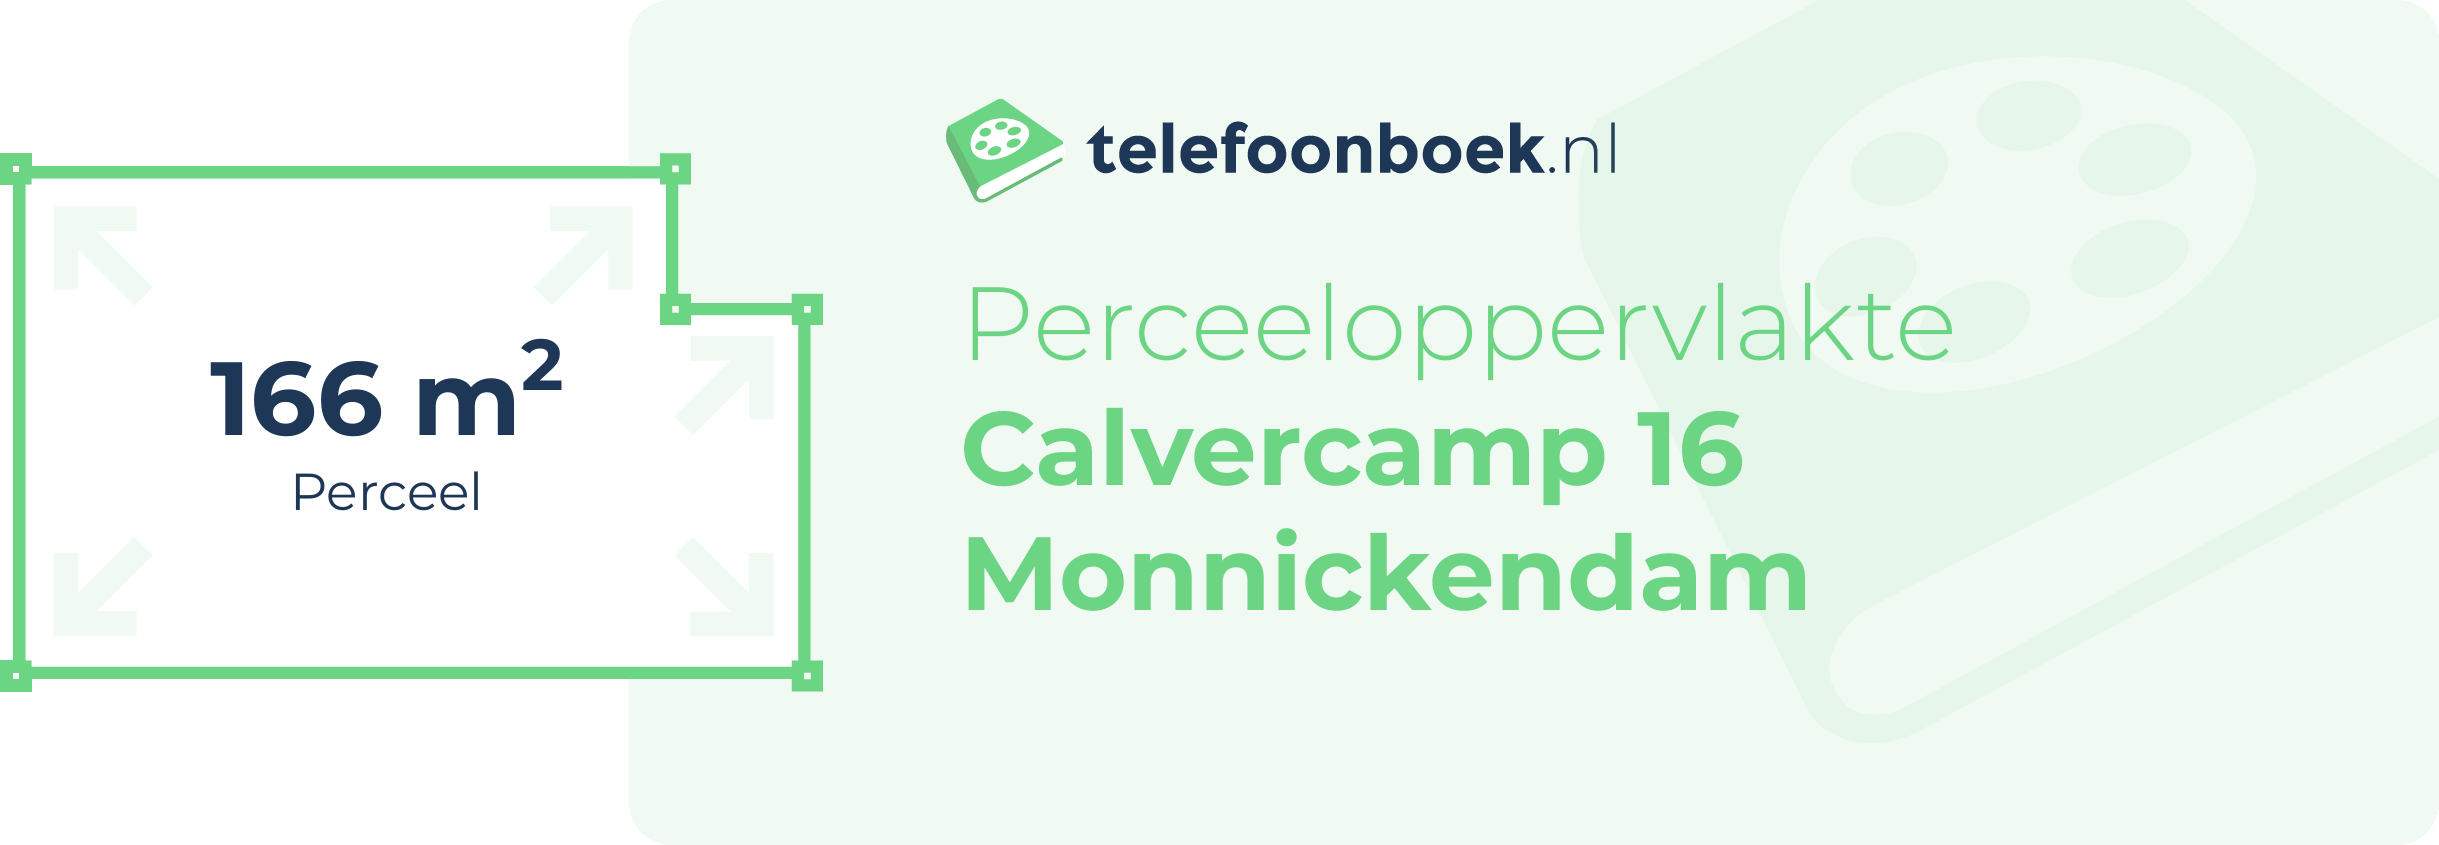 Perceeloppervlakte Calvercamp 16 Monnickendam